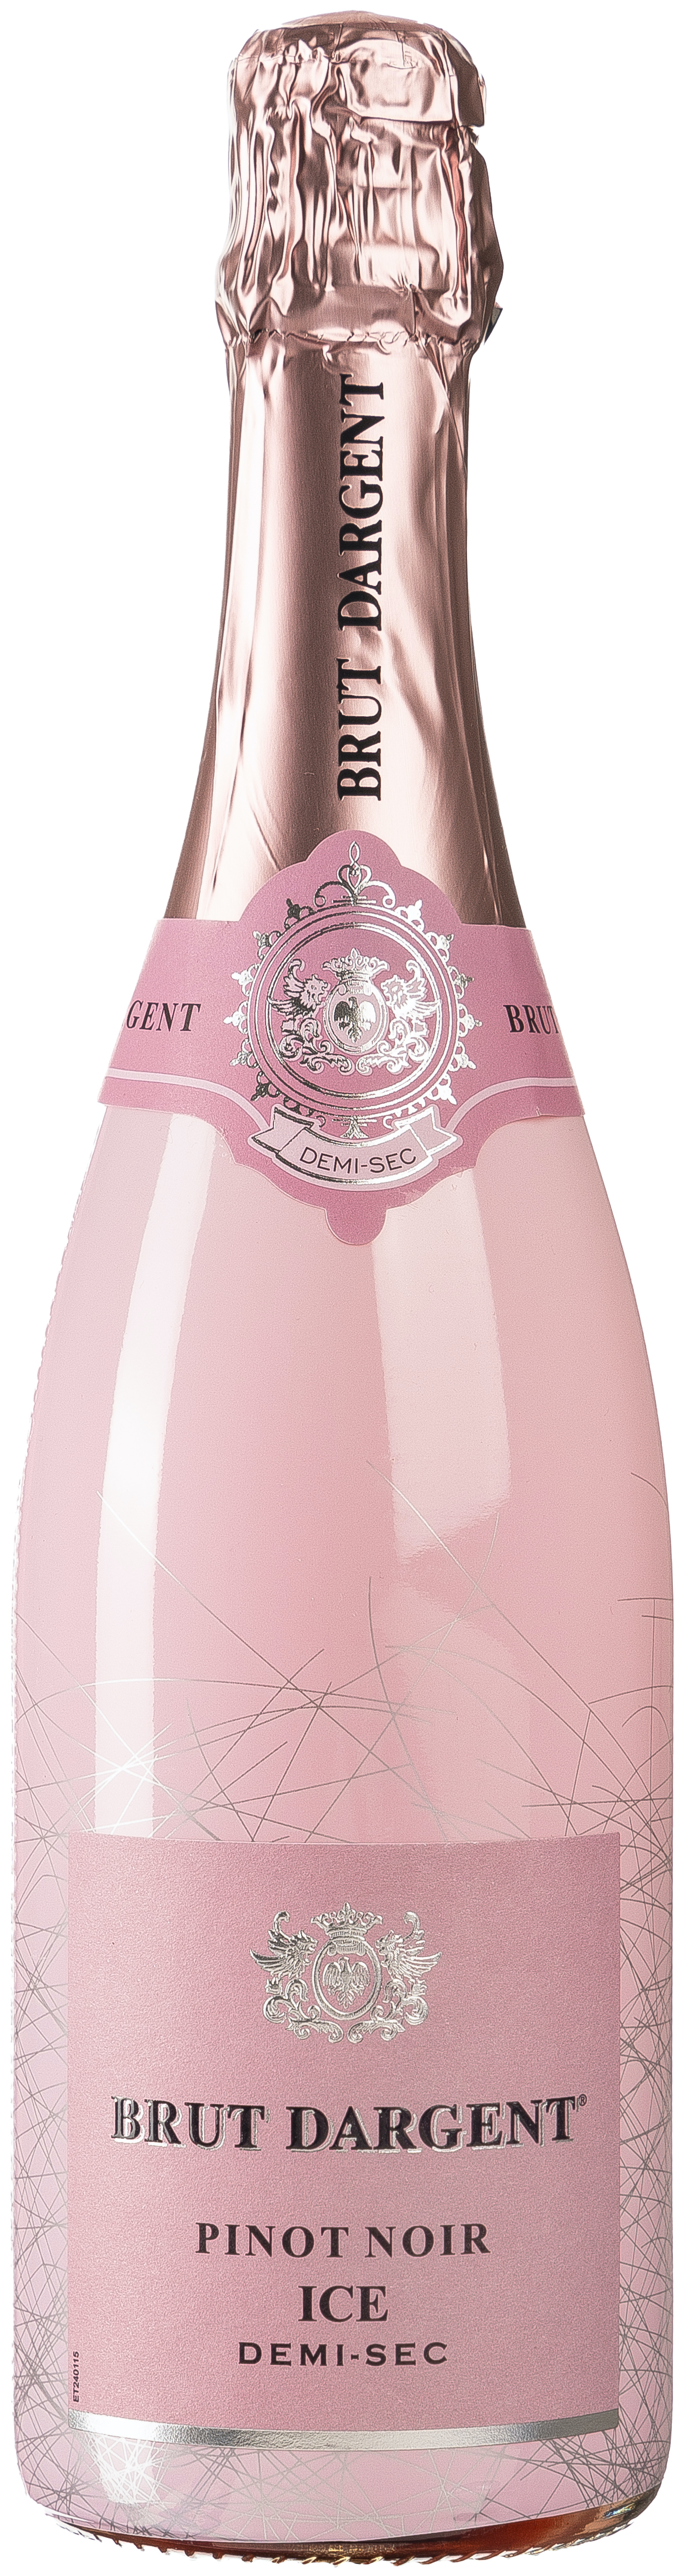 Noir Ice Demi-Sec | Brut 0,75L Dargent vol. 140539 Rosé 11% Pinot